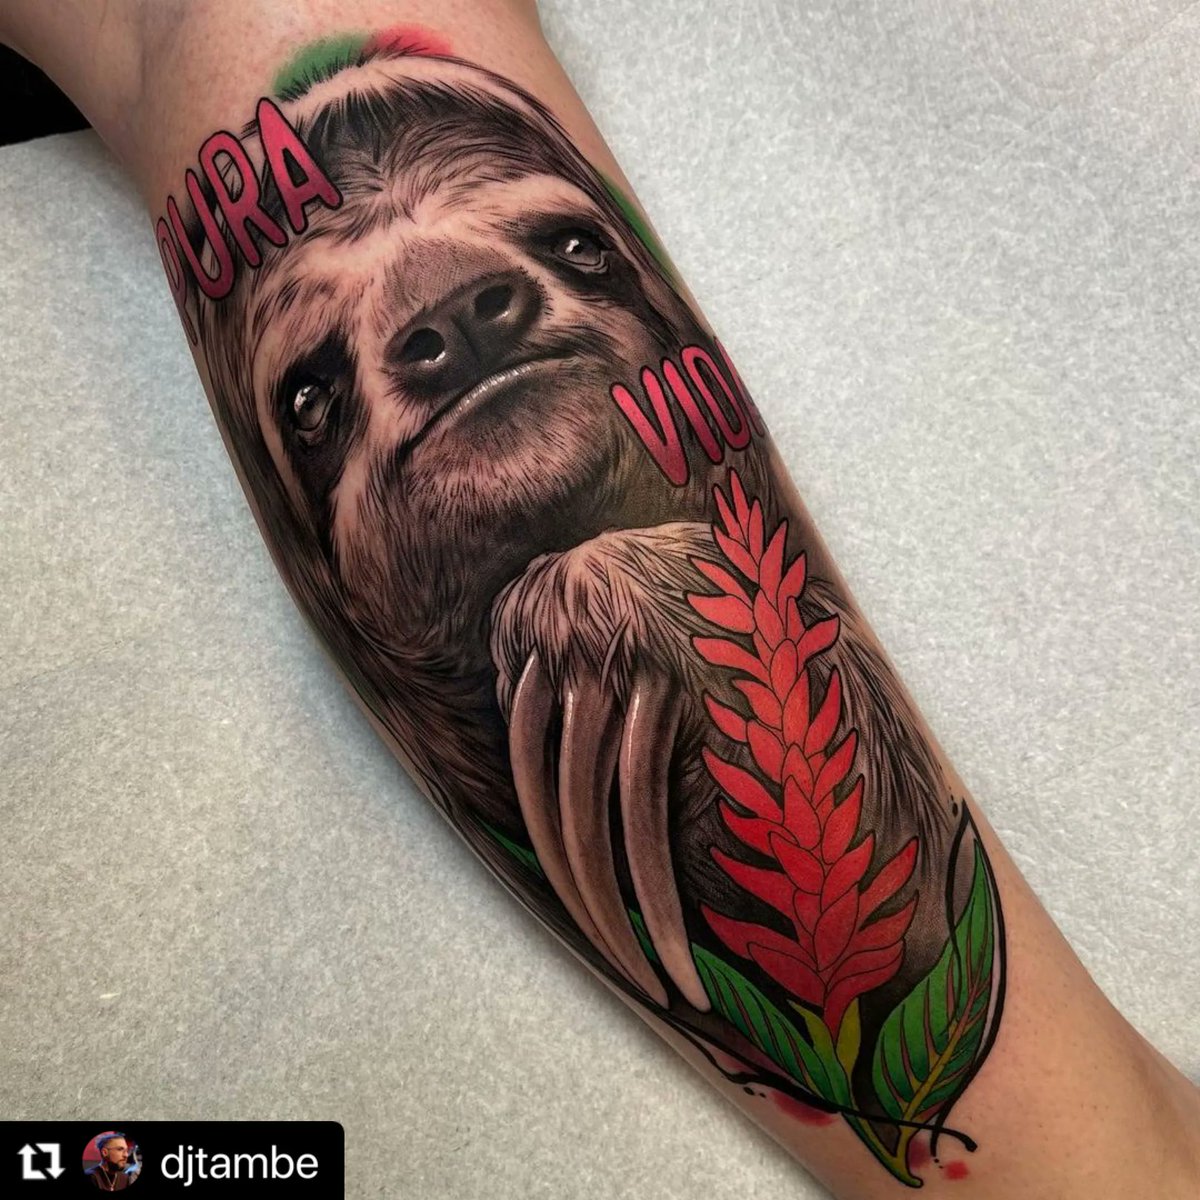 Sponsored Artist: @djtambe 
#beacontattoosupply #tattooartist #tattooartists #tattooartistic #tattooartistlife #tattoosupplies #tattoosupply #tattoostagram #tattoosofinstagram #tattoosociety #tattoo #tattoos #tattoosofig #sloth #slothtattoo #colorrealism #realism #realismtattoo